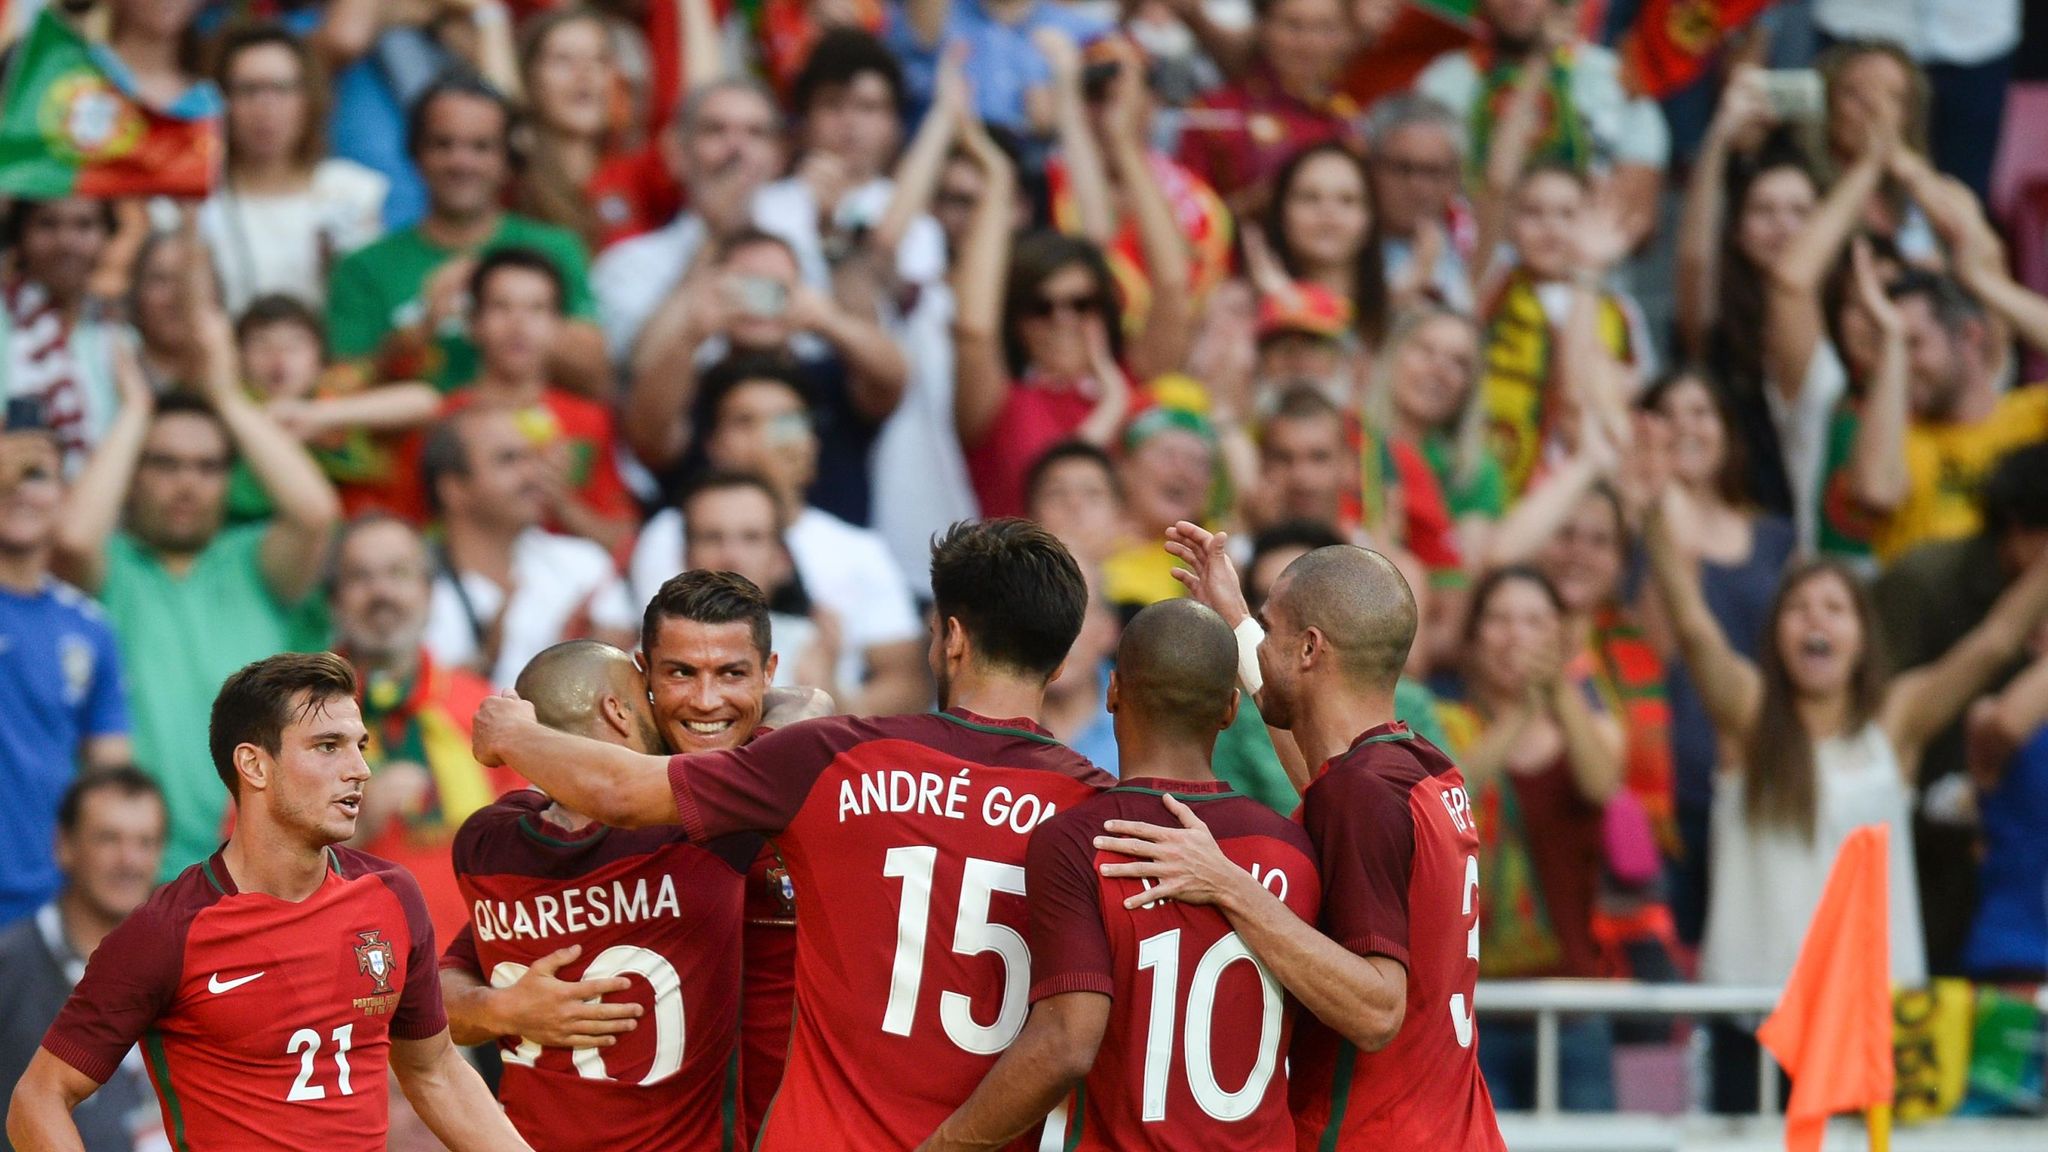 Portugal 7 - 0 Estonia - Match Report & Highlights